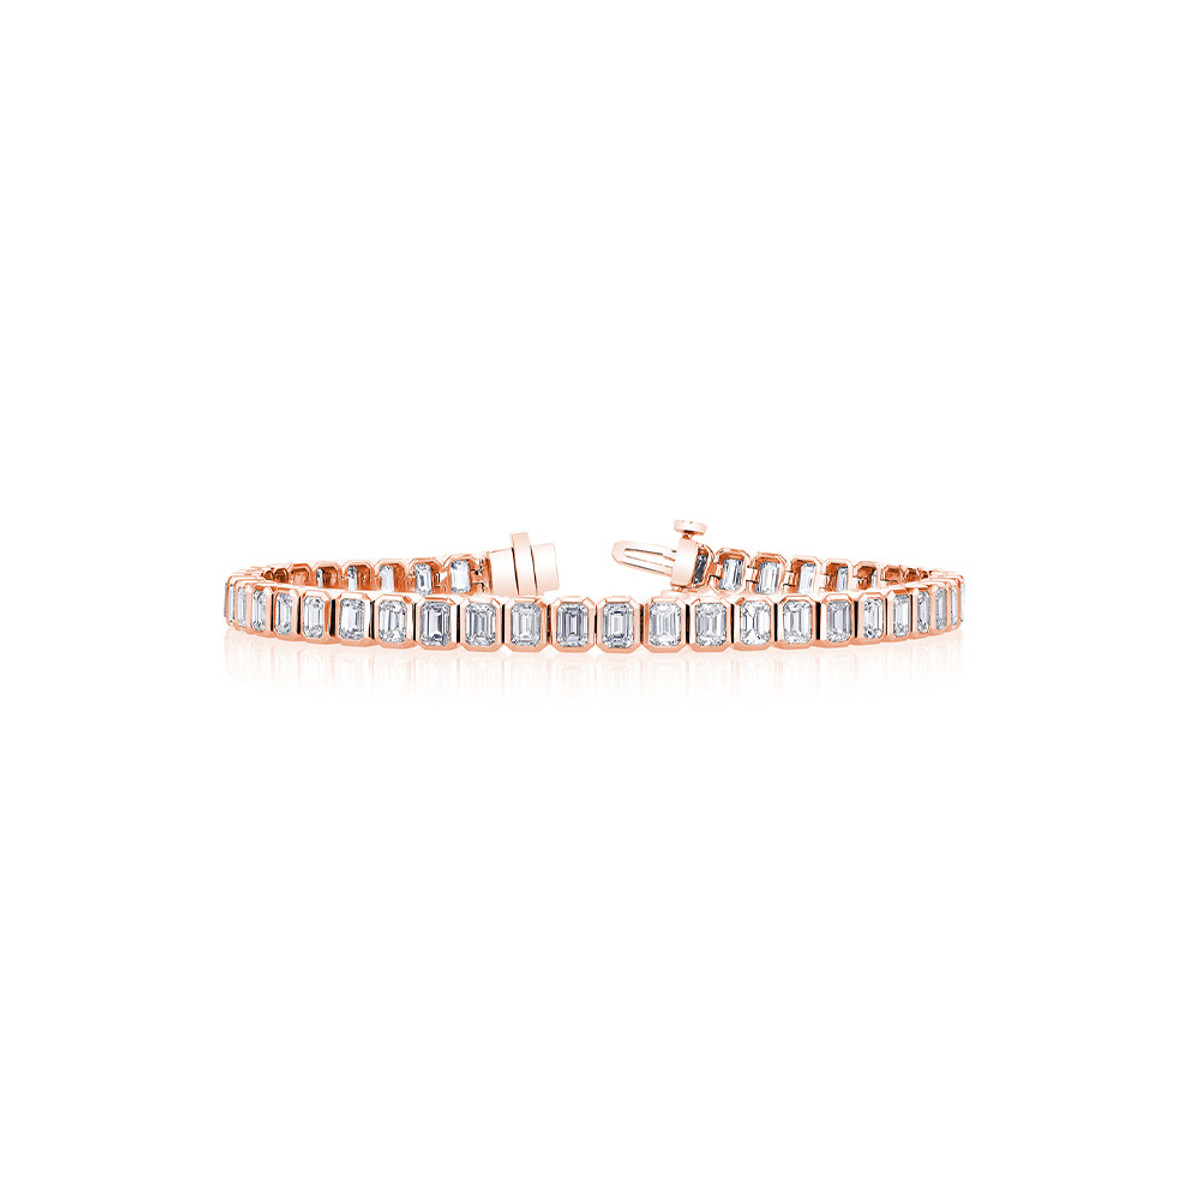 Hyde Park Collection 18K Rose Gold Diamond Line Bracelet-59691 Product Image